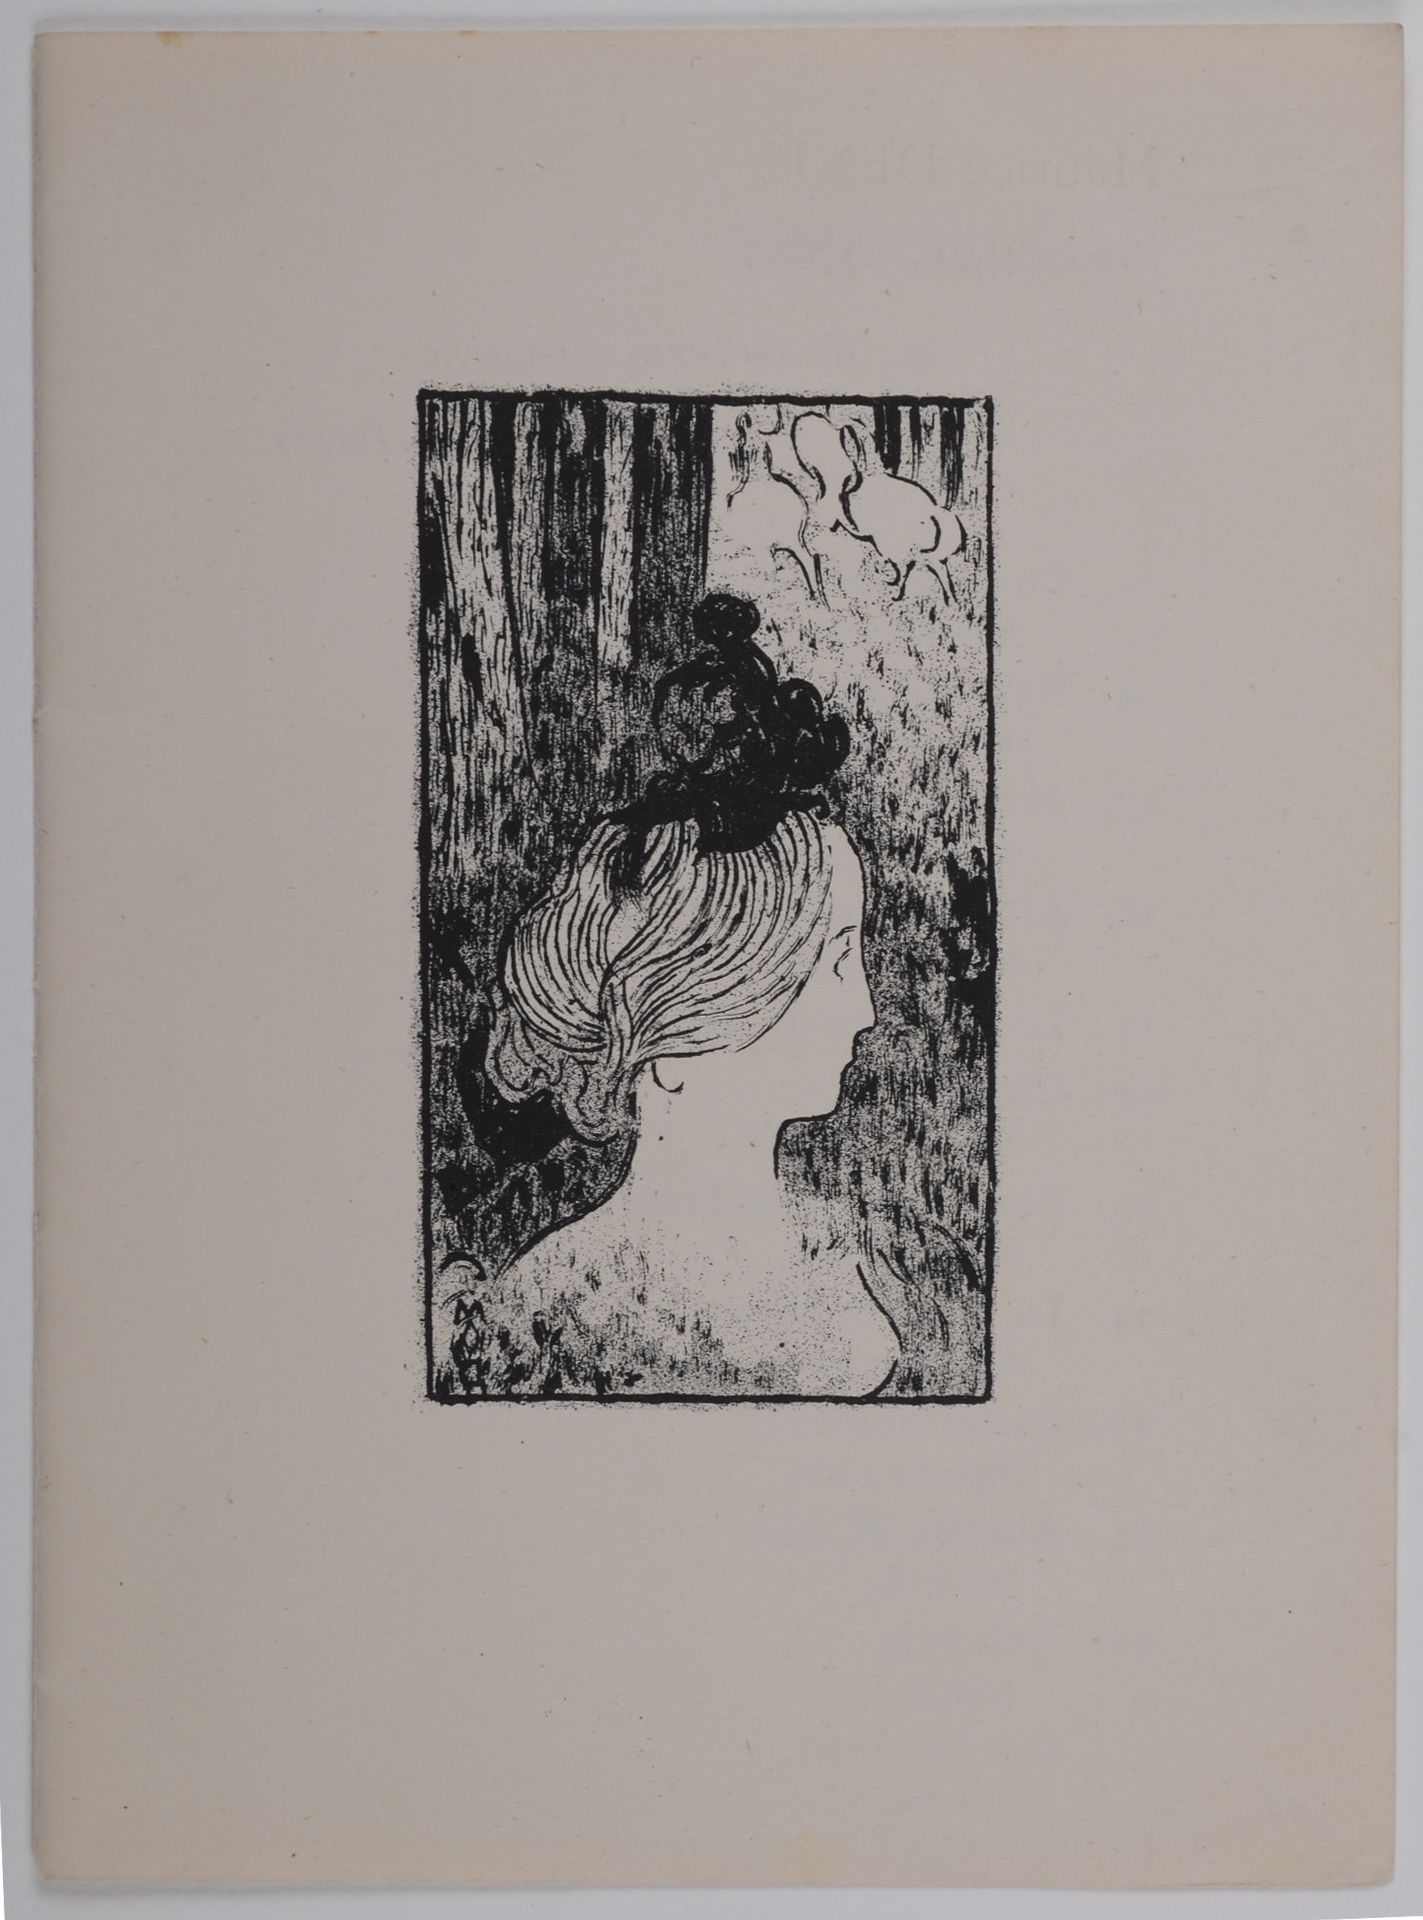 MAURICE DENIS 莫里斯-丹尼斯

金色花园里的女人》，1894年

 

 石头上的原始石版画

 尺寸。

 纸张：7 1/4 x 5 1/2"(&hellip;